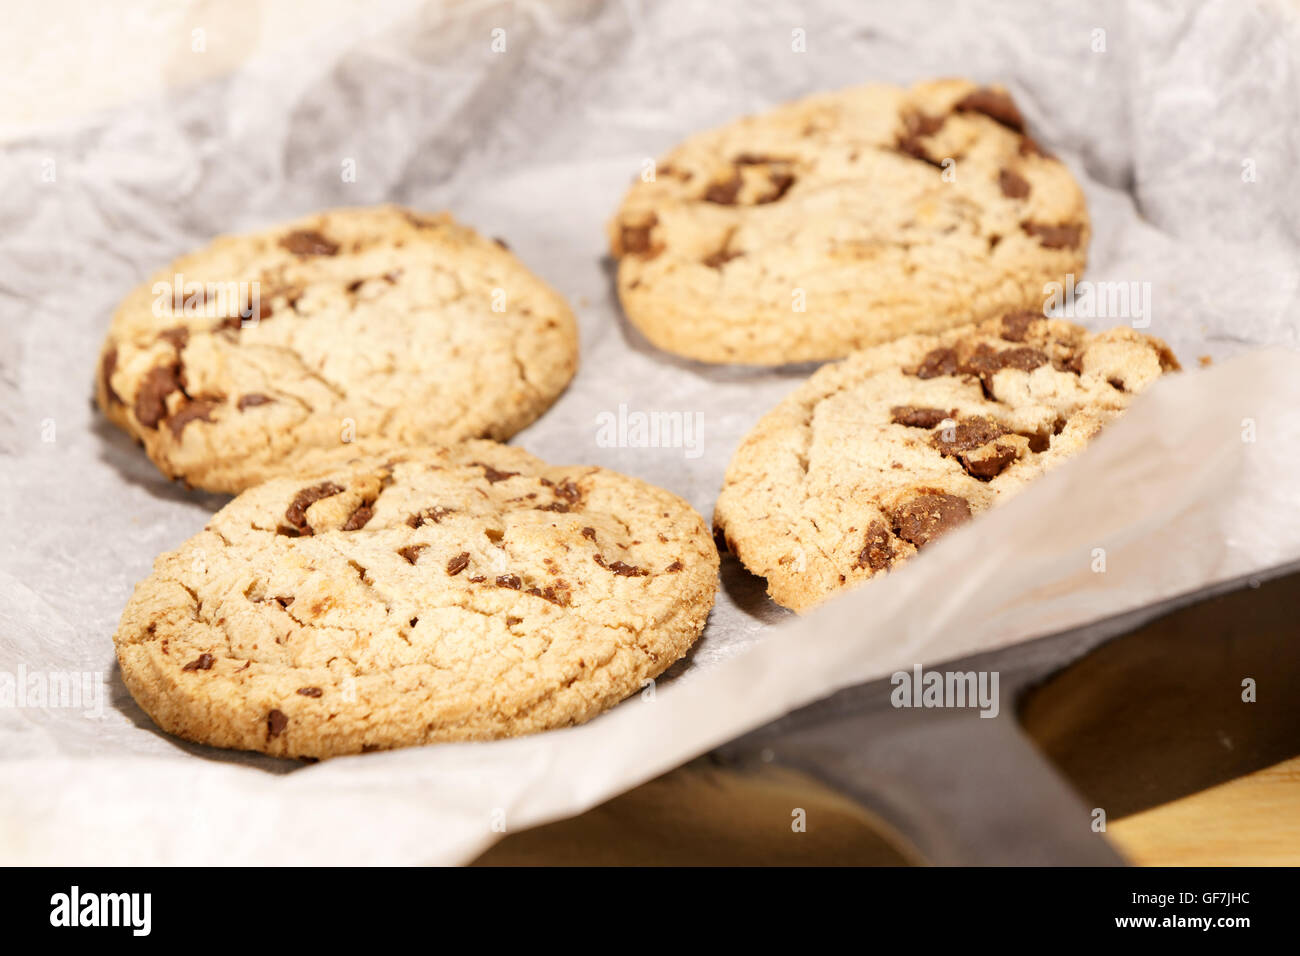 Round soft bake chocolate chip cookie close up Stock Photo